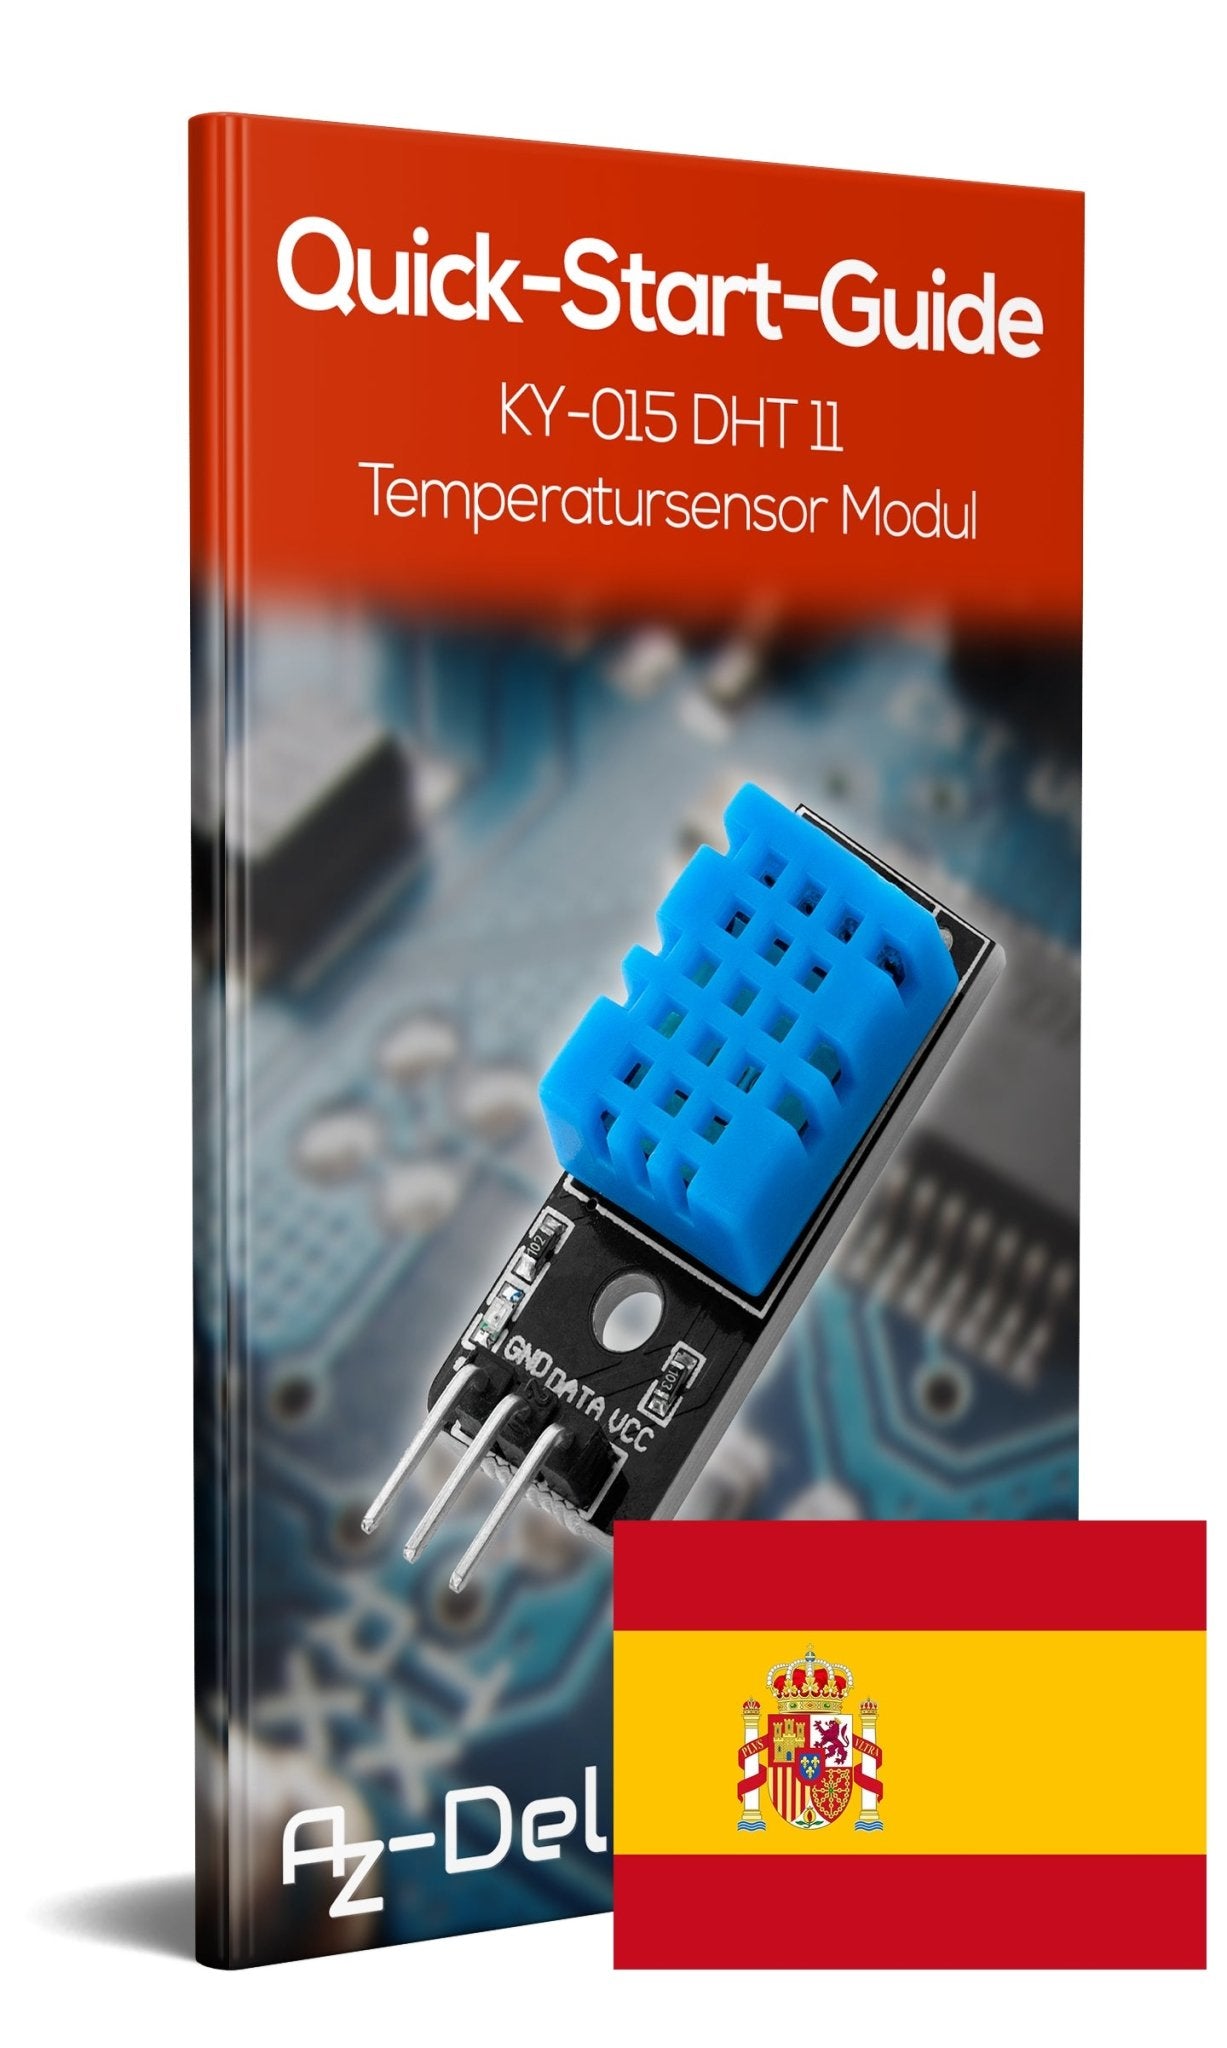 KY-015 DHT 11 Temperatursensor Modul - AZ-Delivery